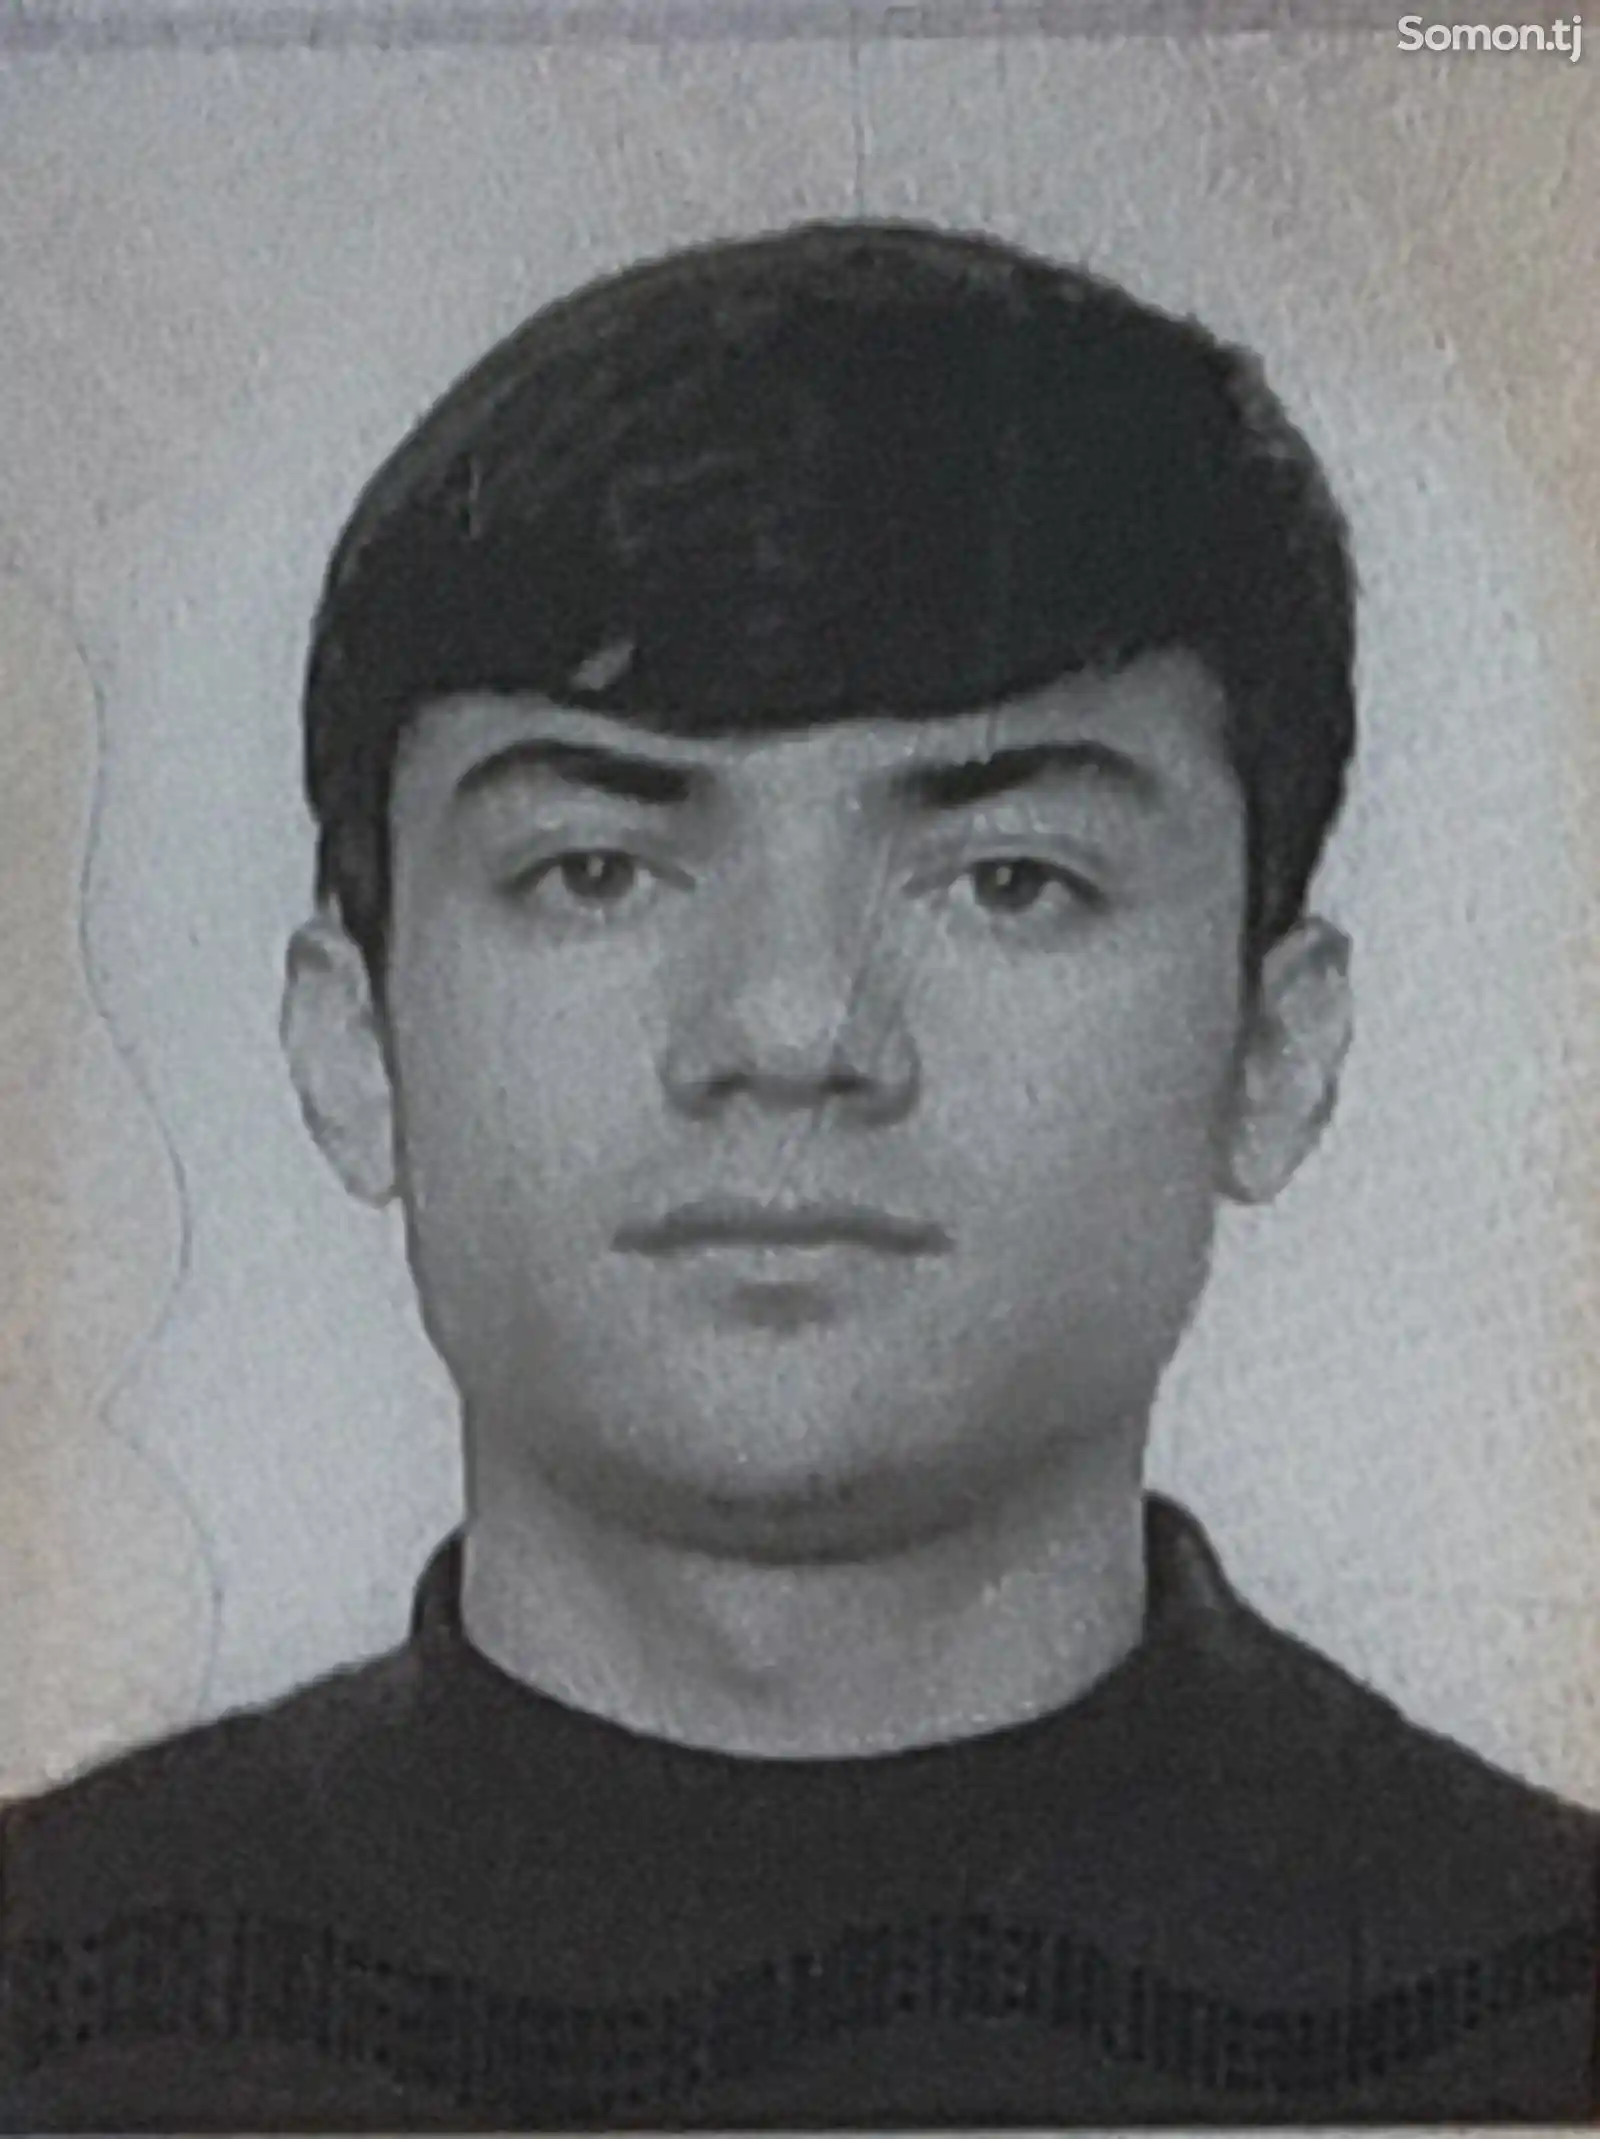 Найден паспорт на имя Хайдаров Фазлиддин Сафармахмадович